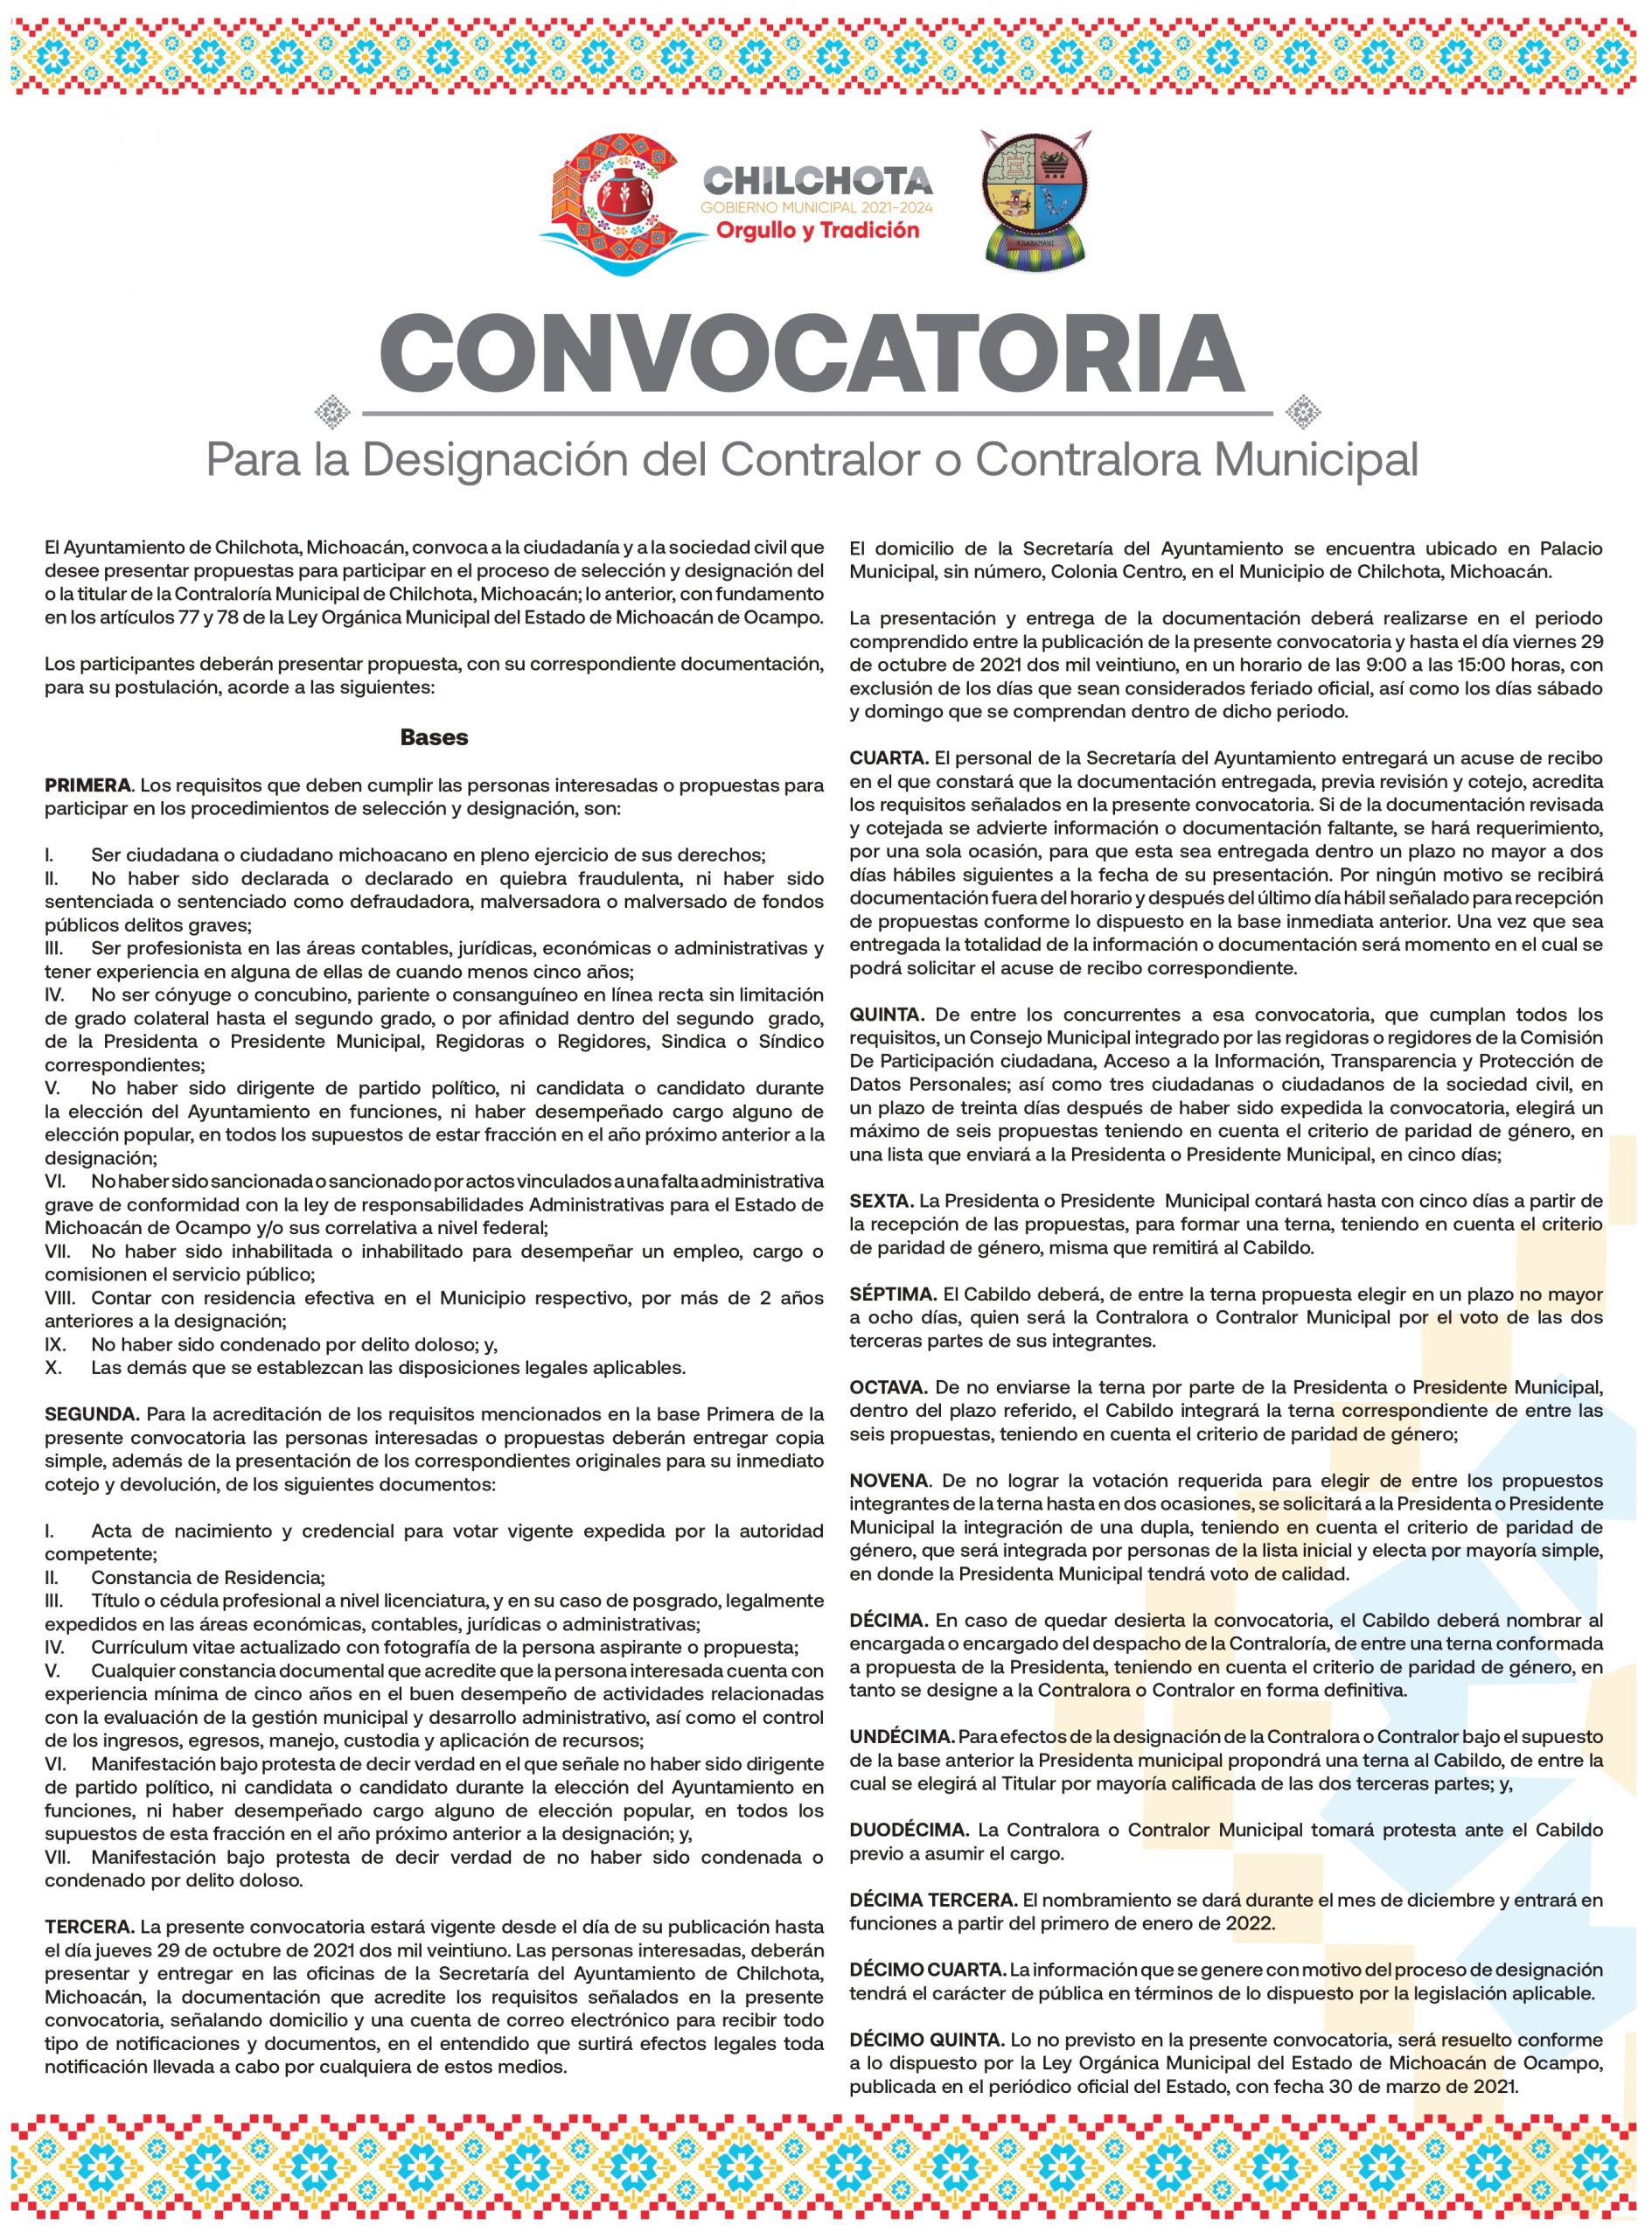 Convocatoria  para proceso de selección de la Contraloría Municipal de Chilchota,  30 de septiembre 2021